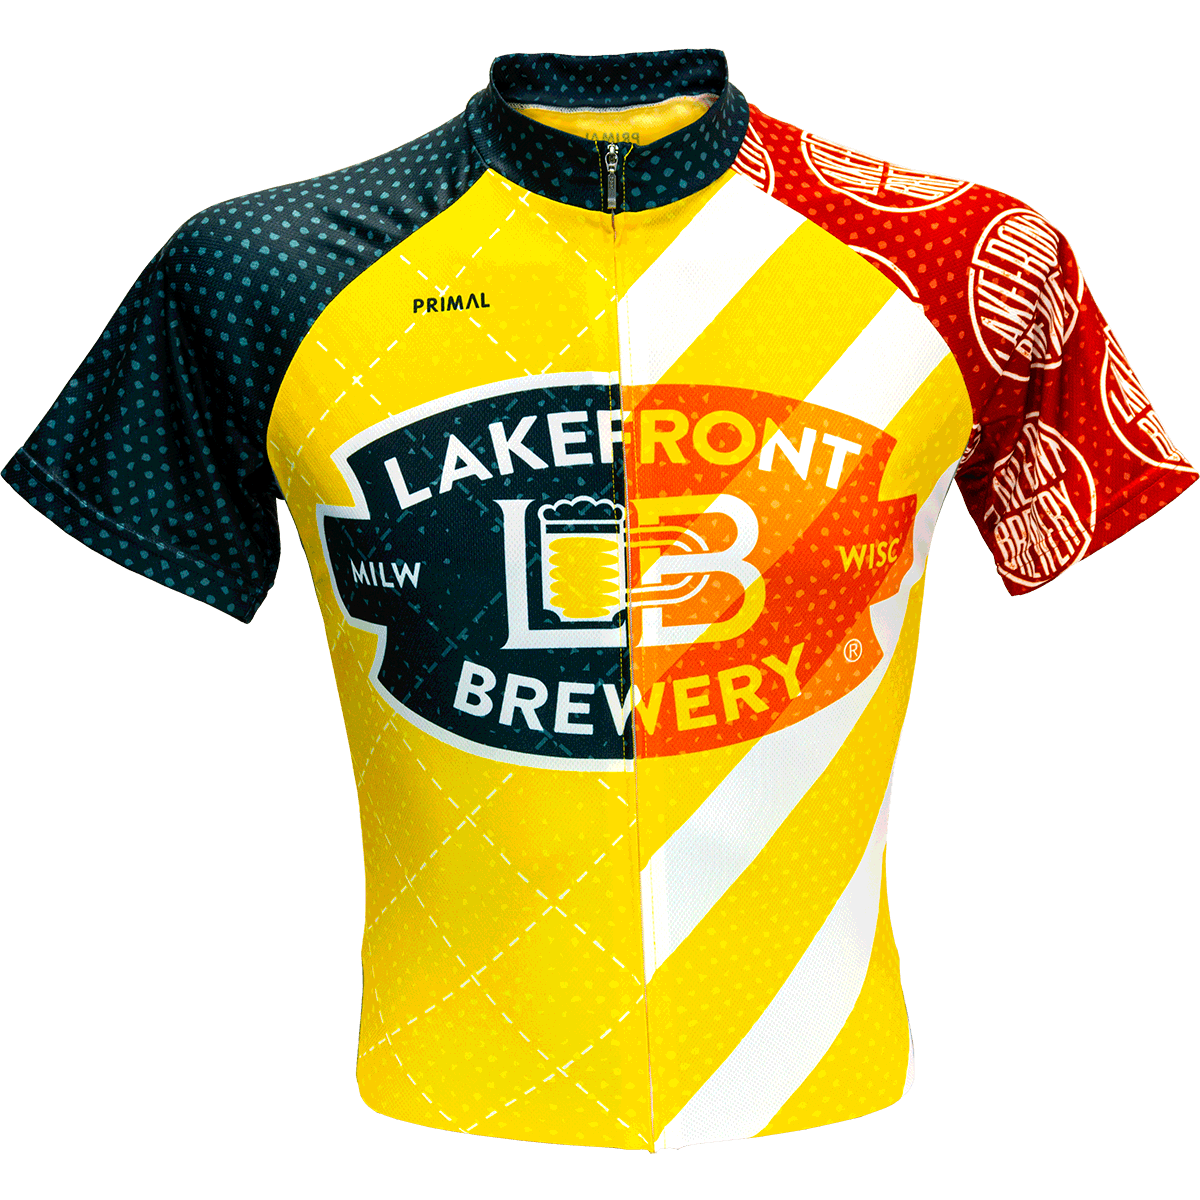 Bike - Lakefront Brewery